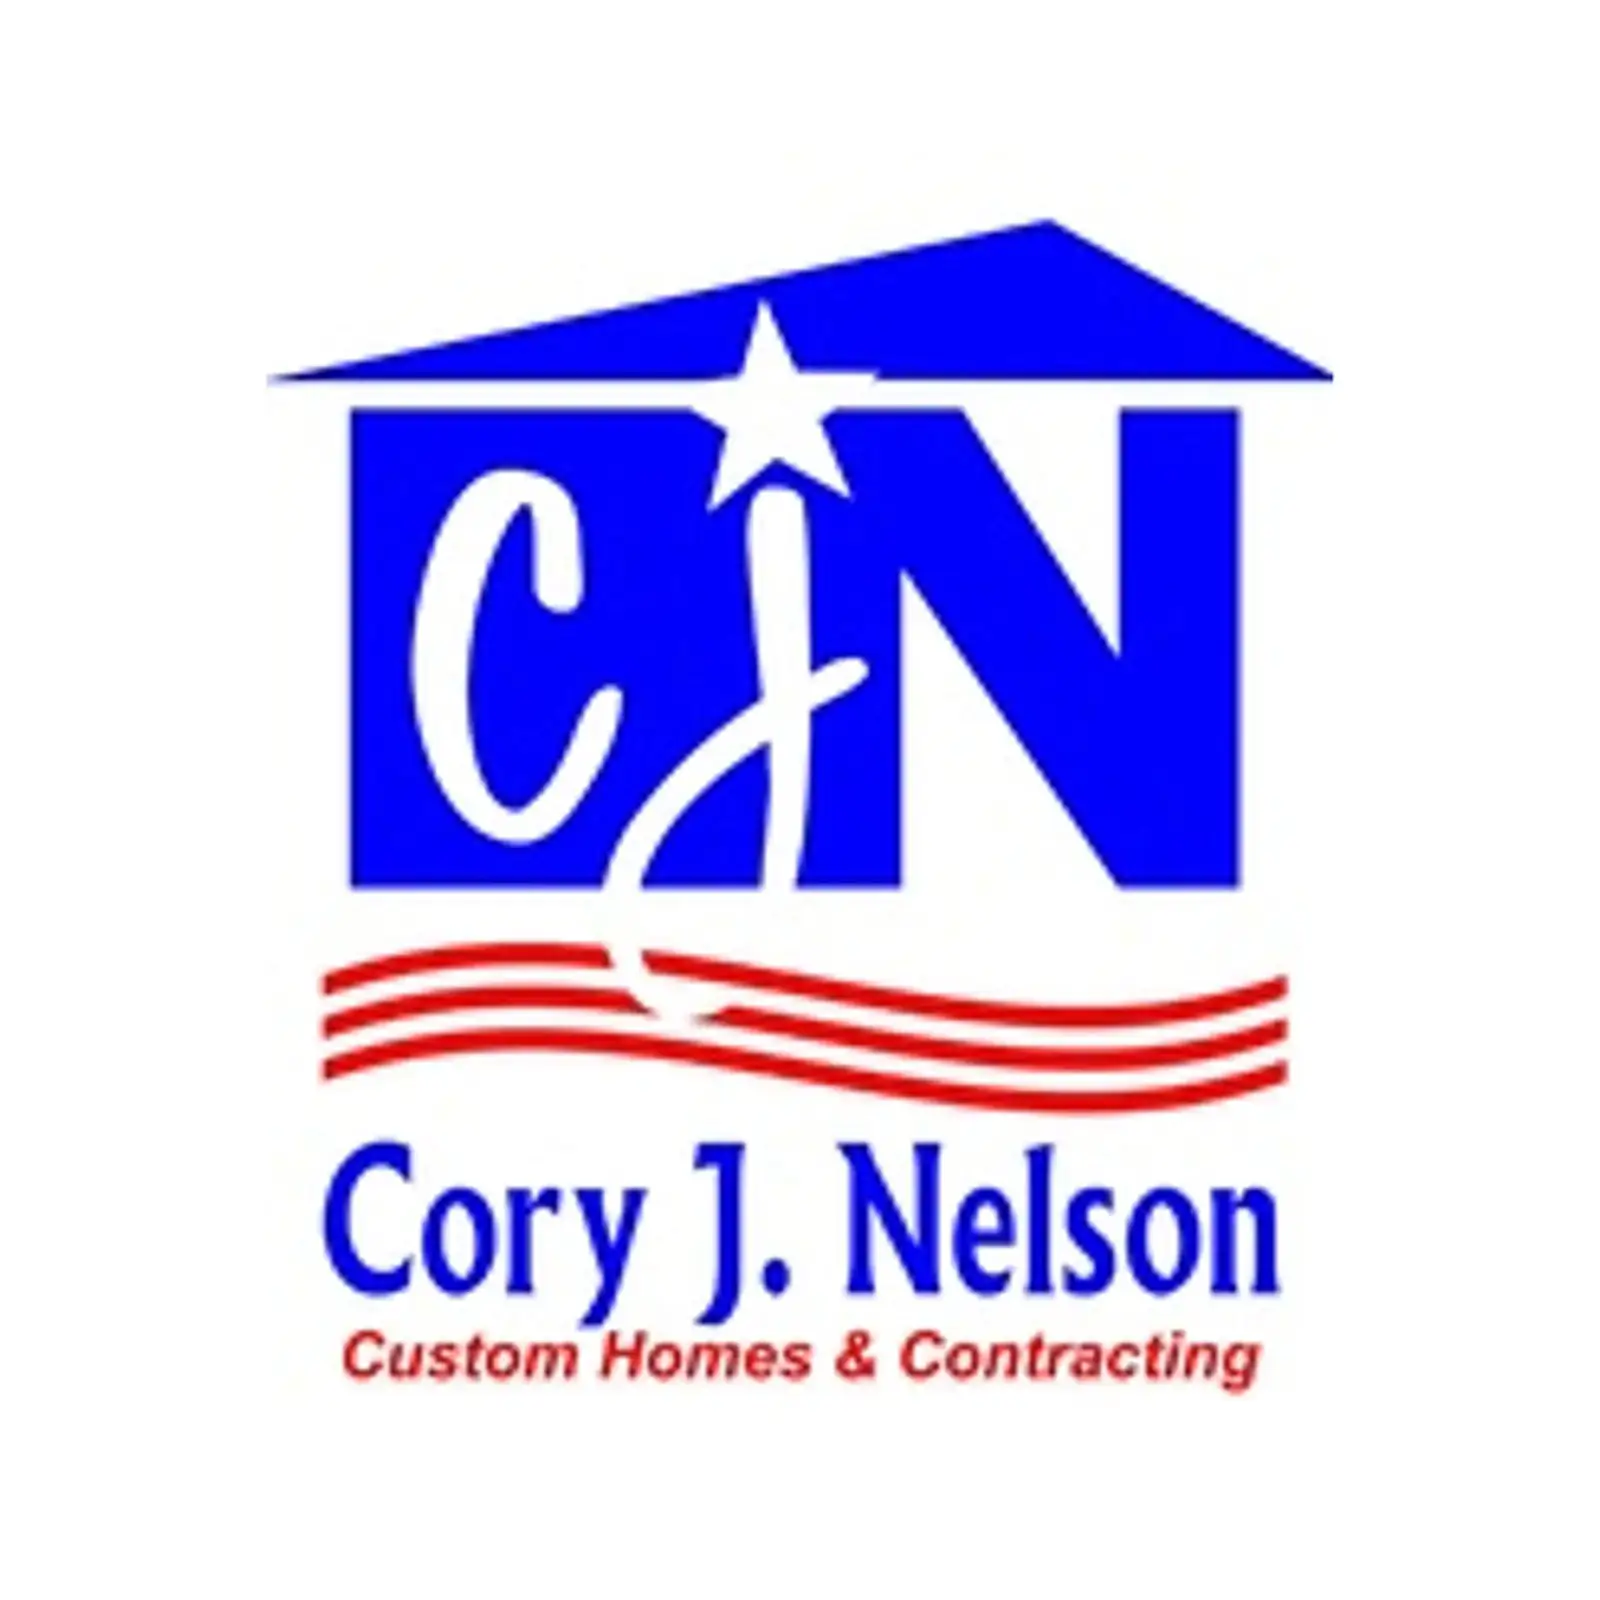 Cory J Nelson Custom Homes & Contracting logo